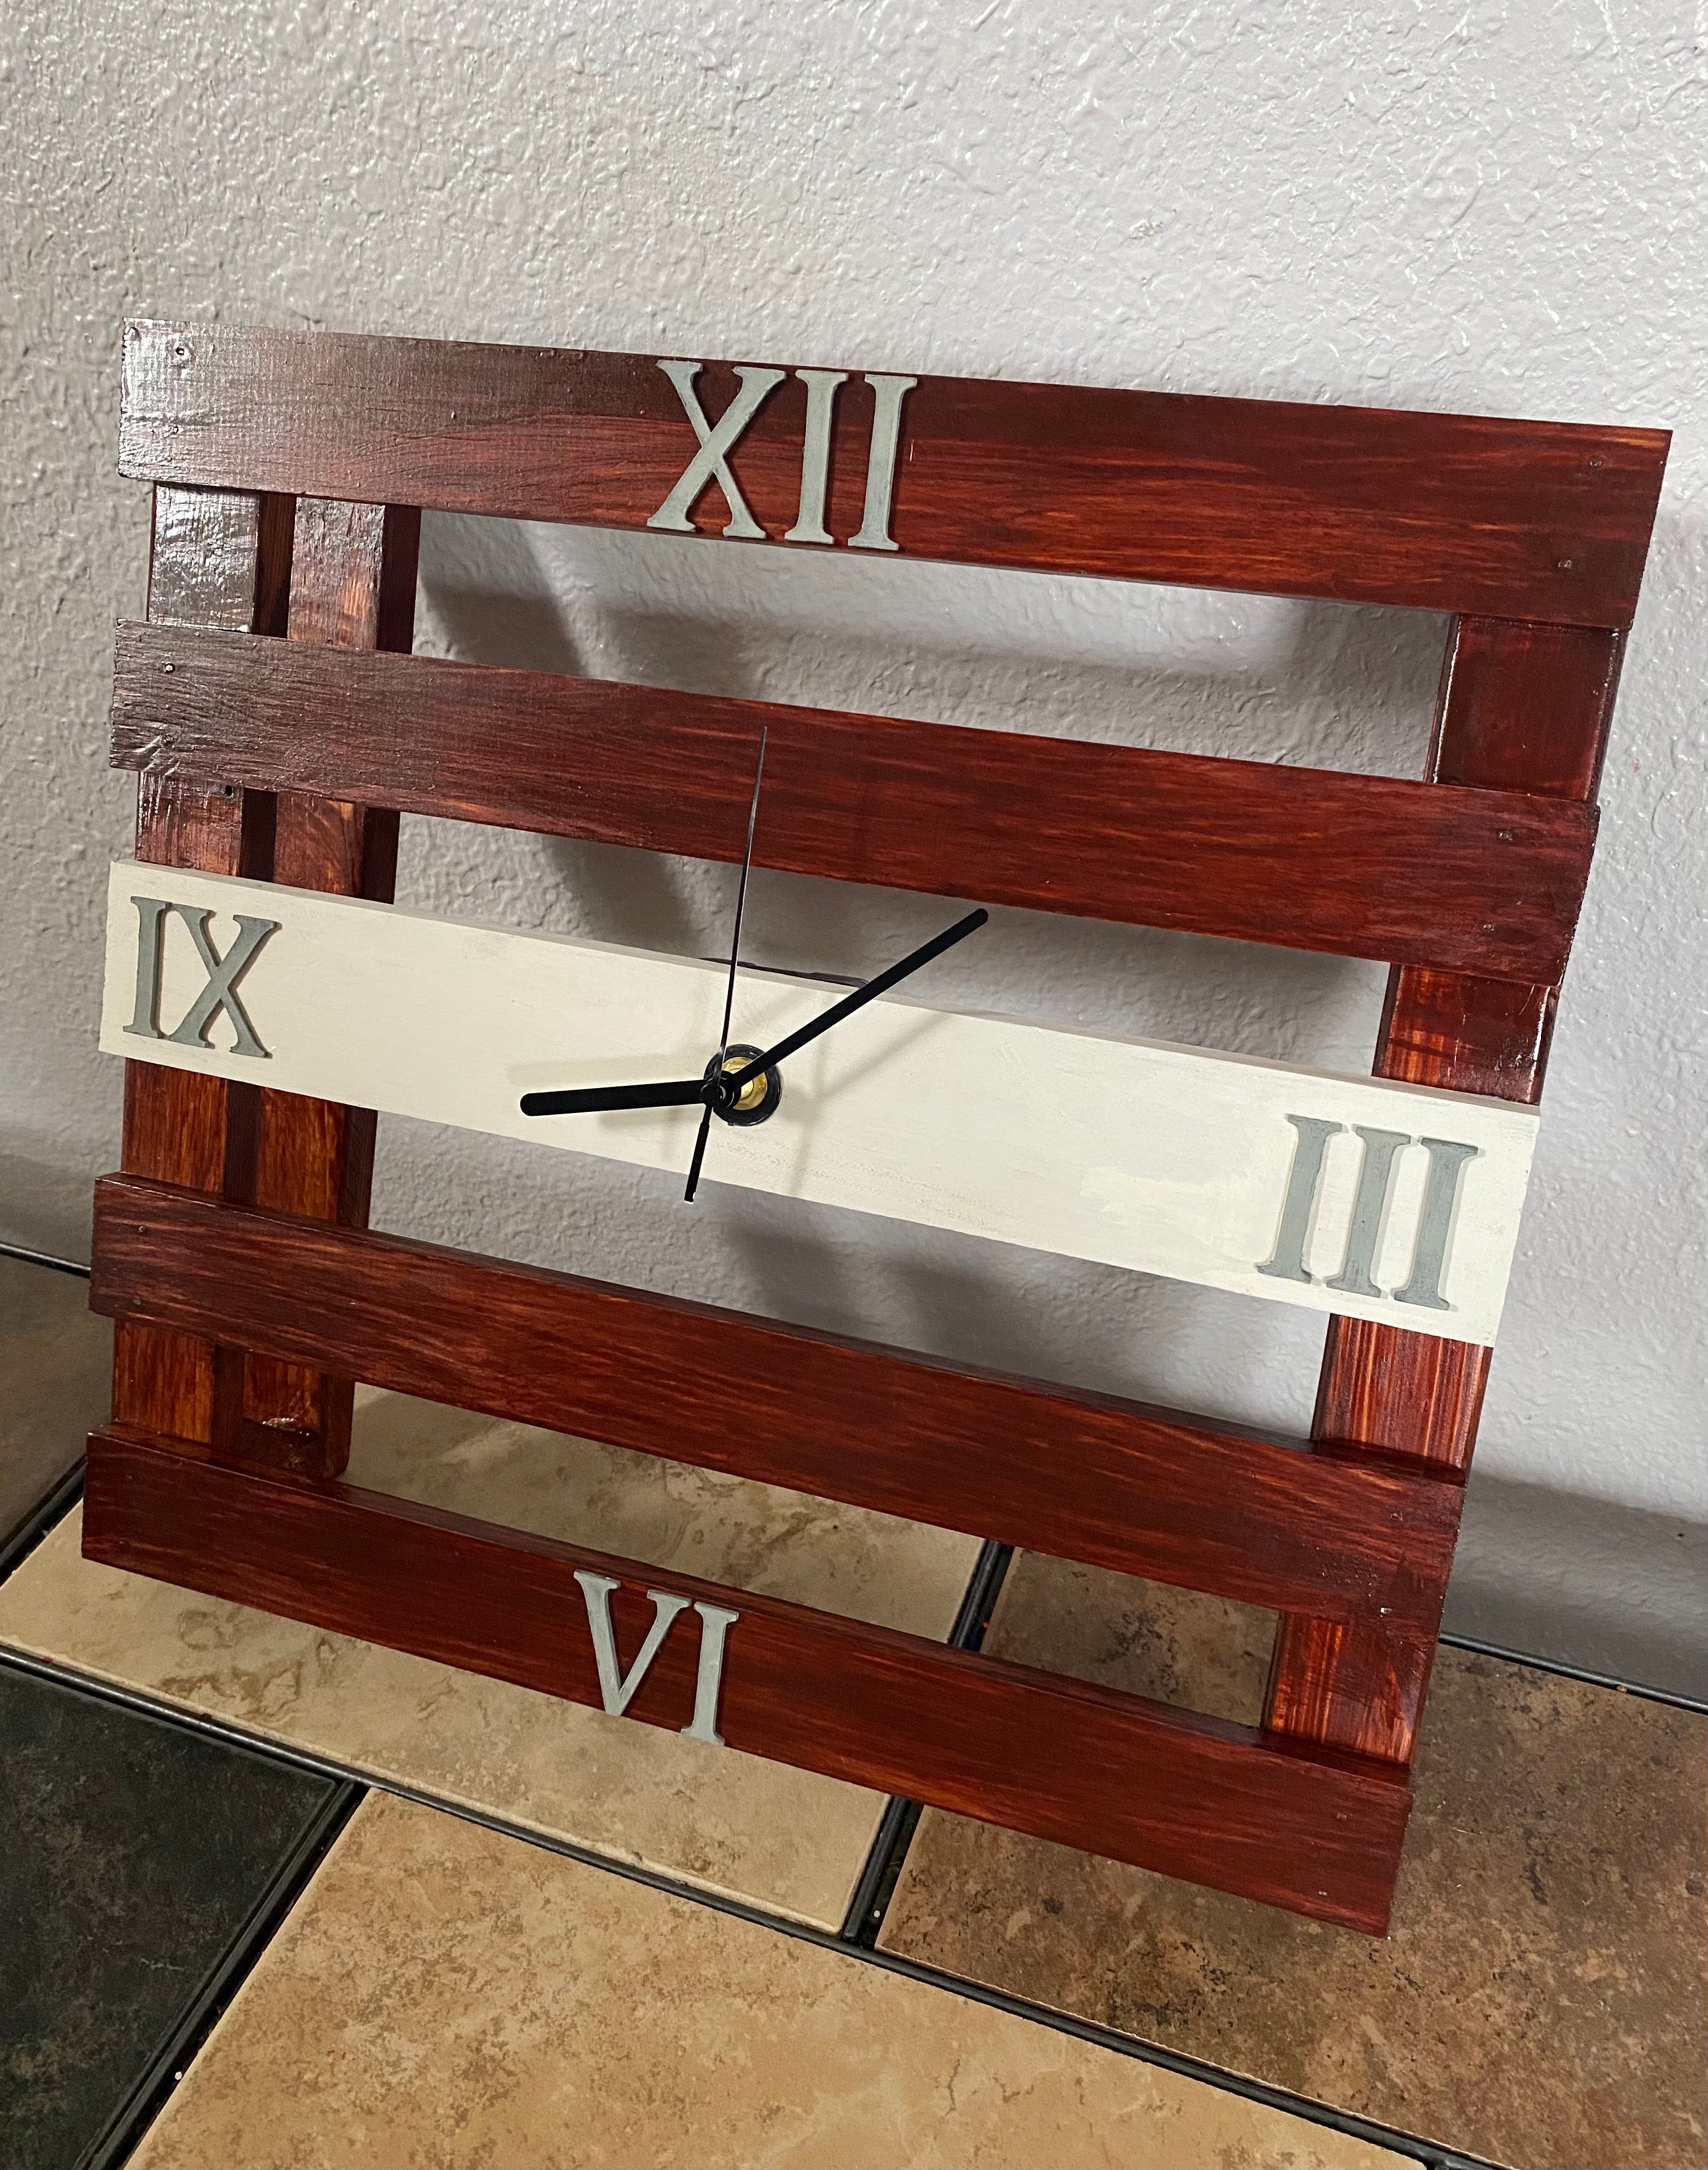 Plate pallet clock